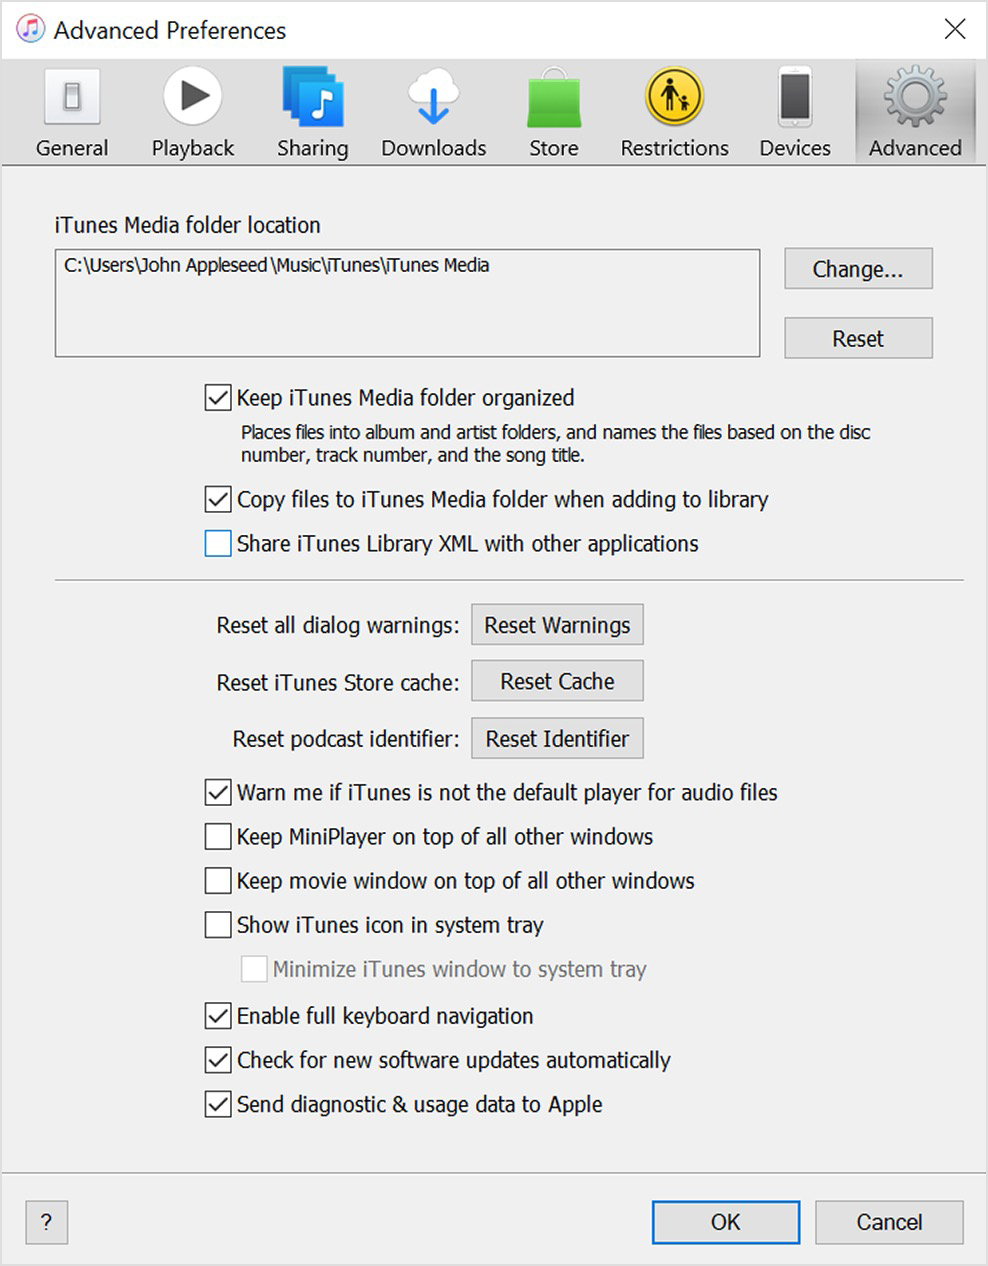 Advanced Preferences screen showing iTunes Media folder location 